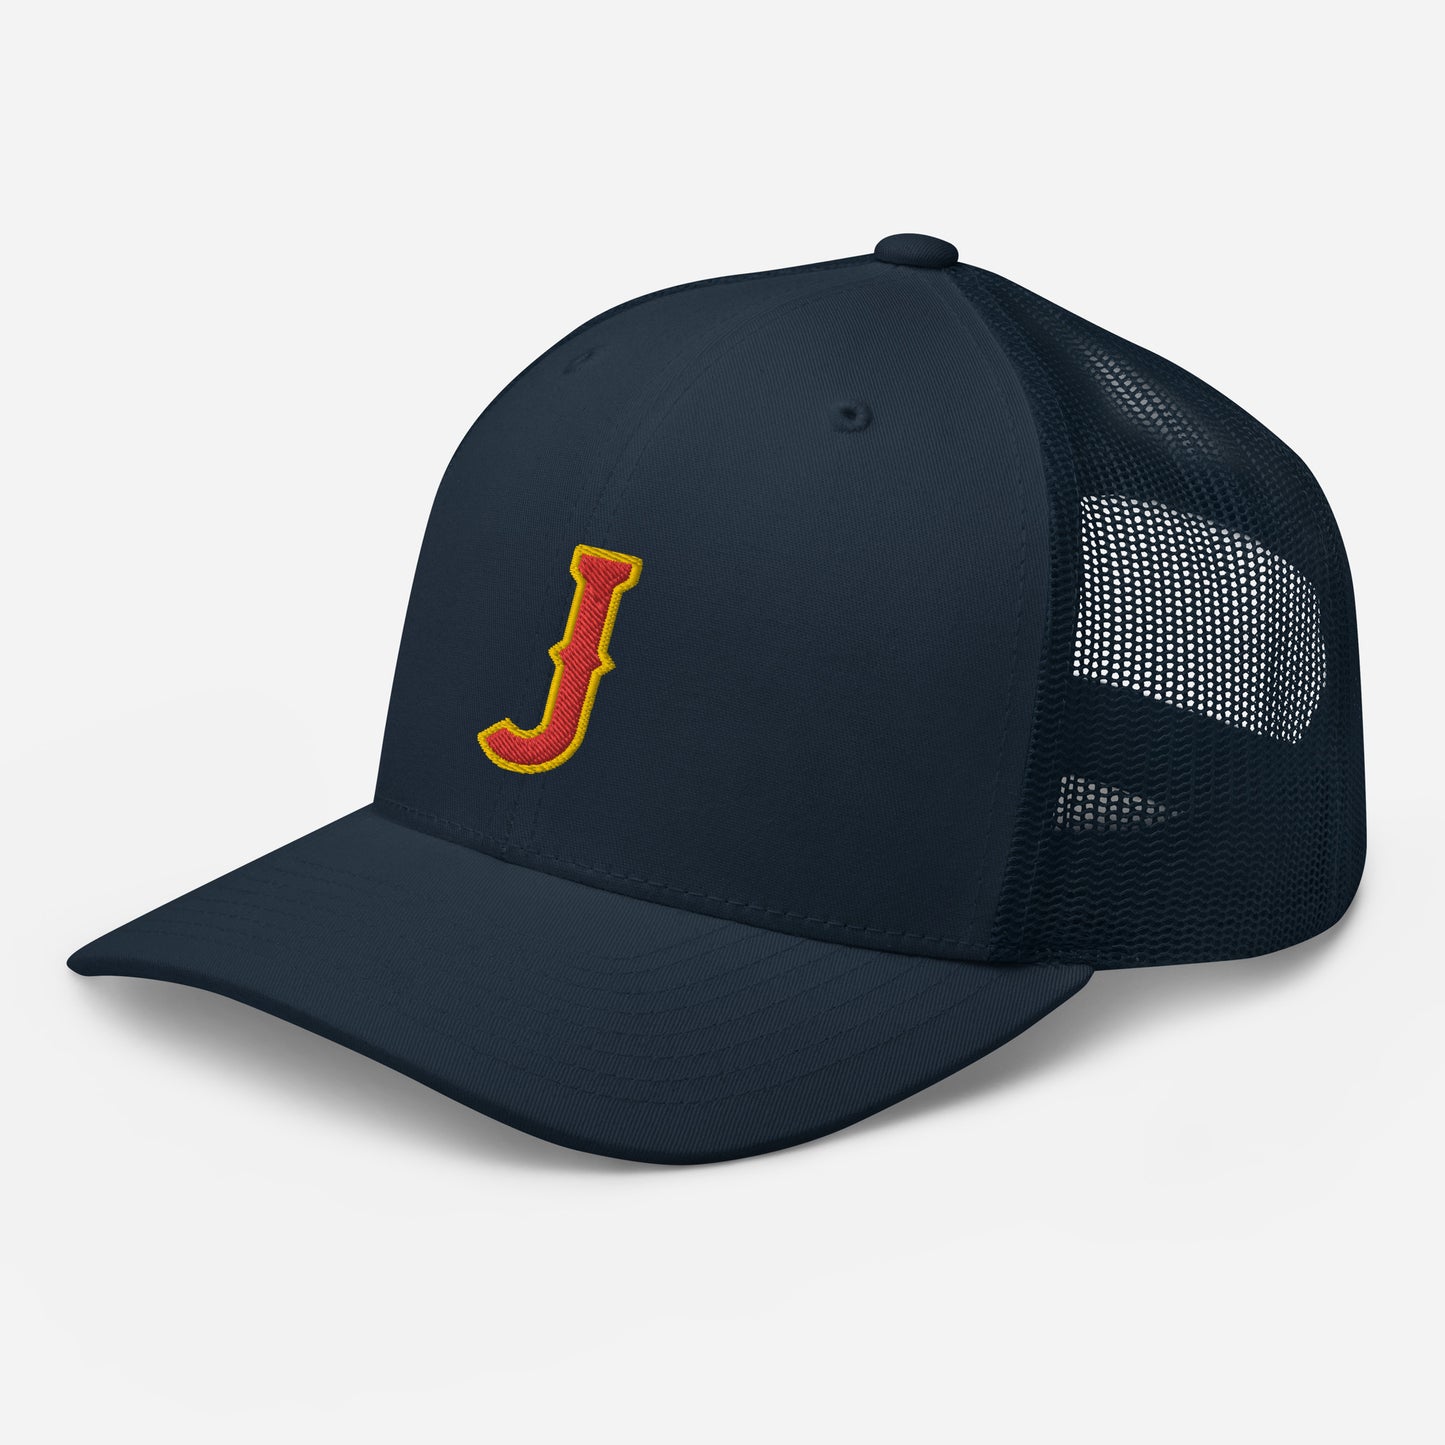 Team Japan Baseball Trucker Cap